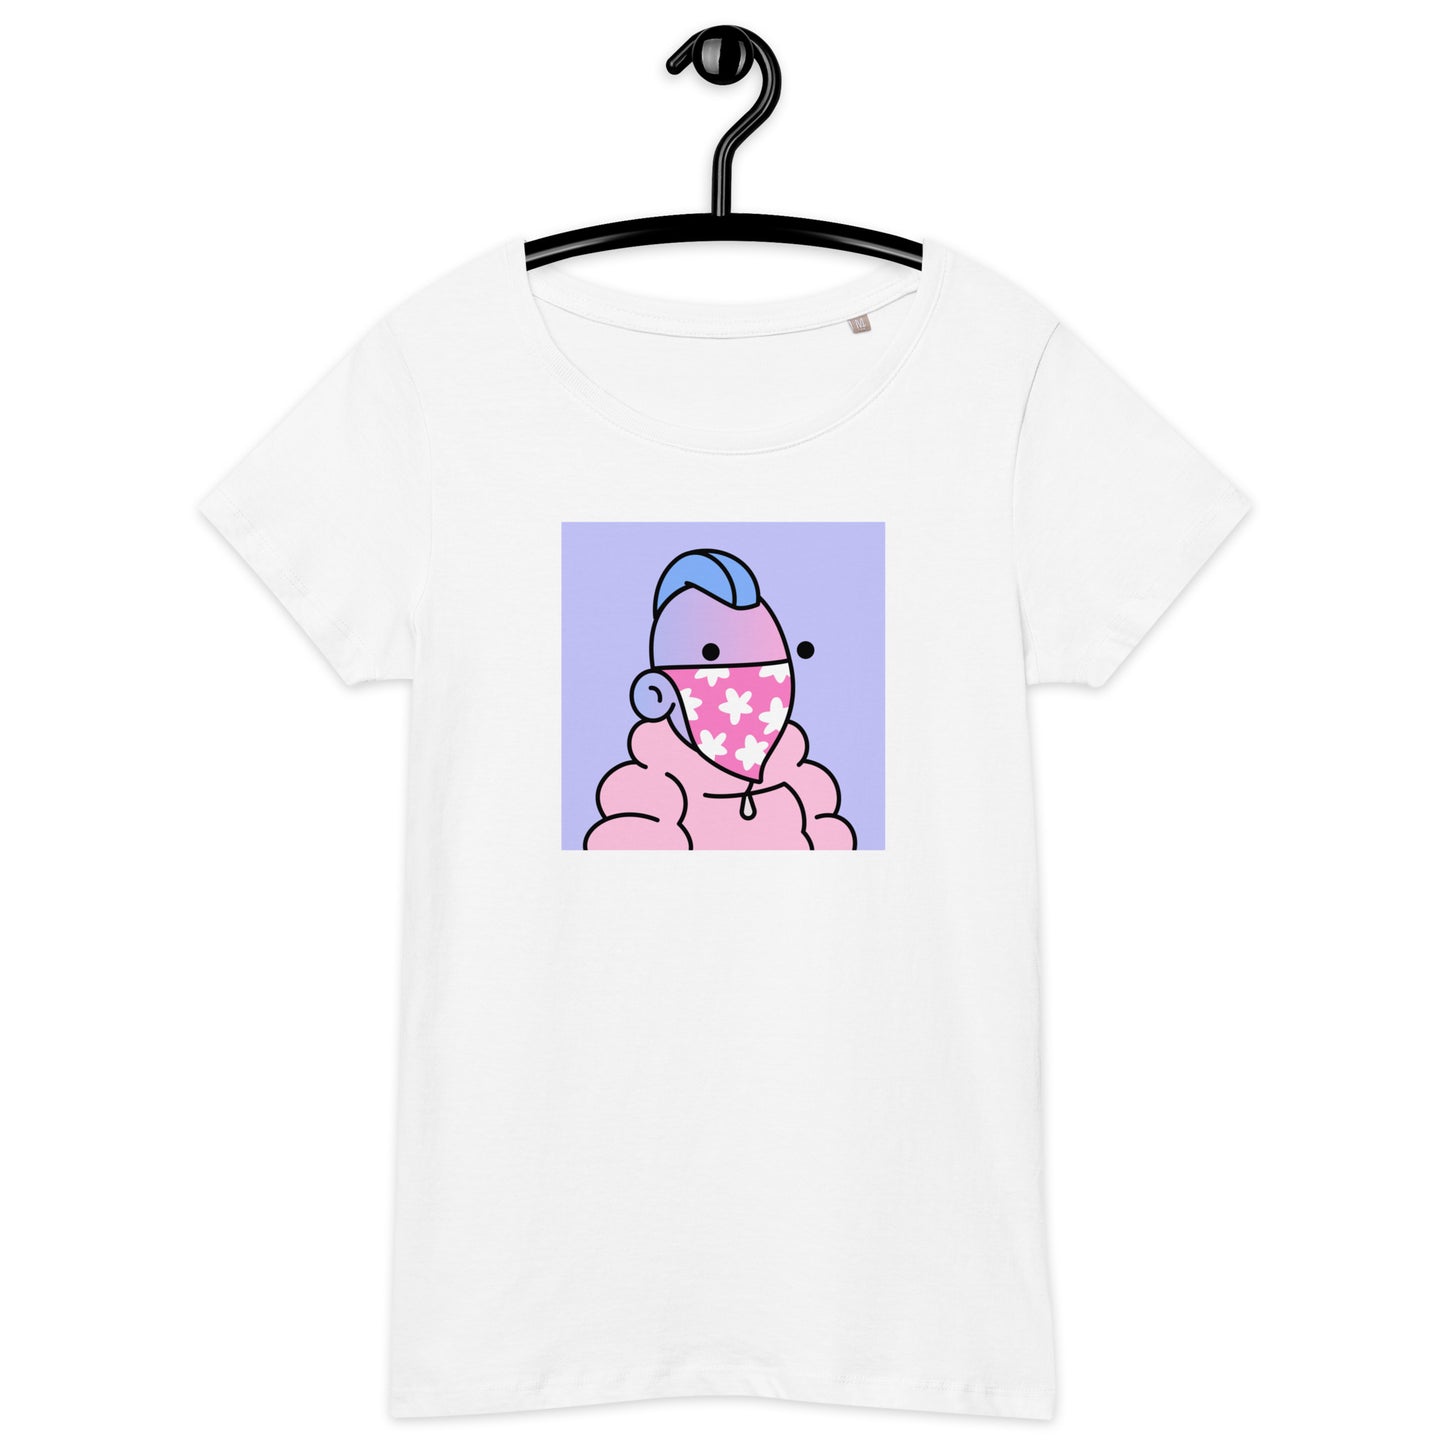 Women’s basic organic t-shirt feat Doodle #8515